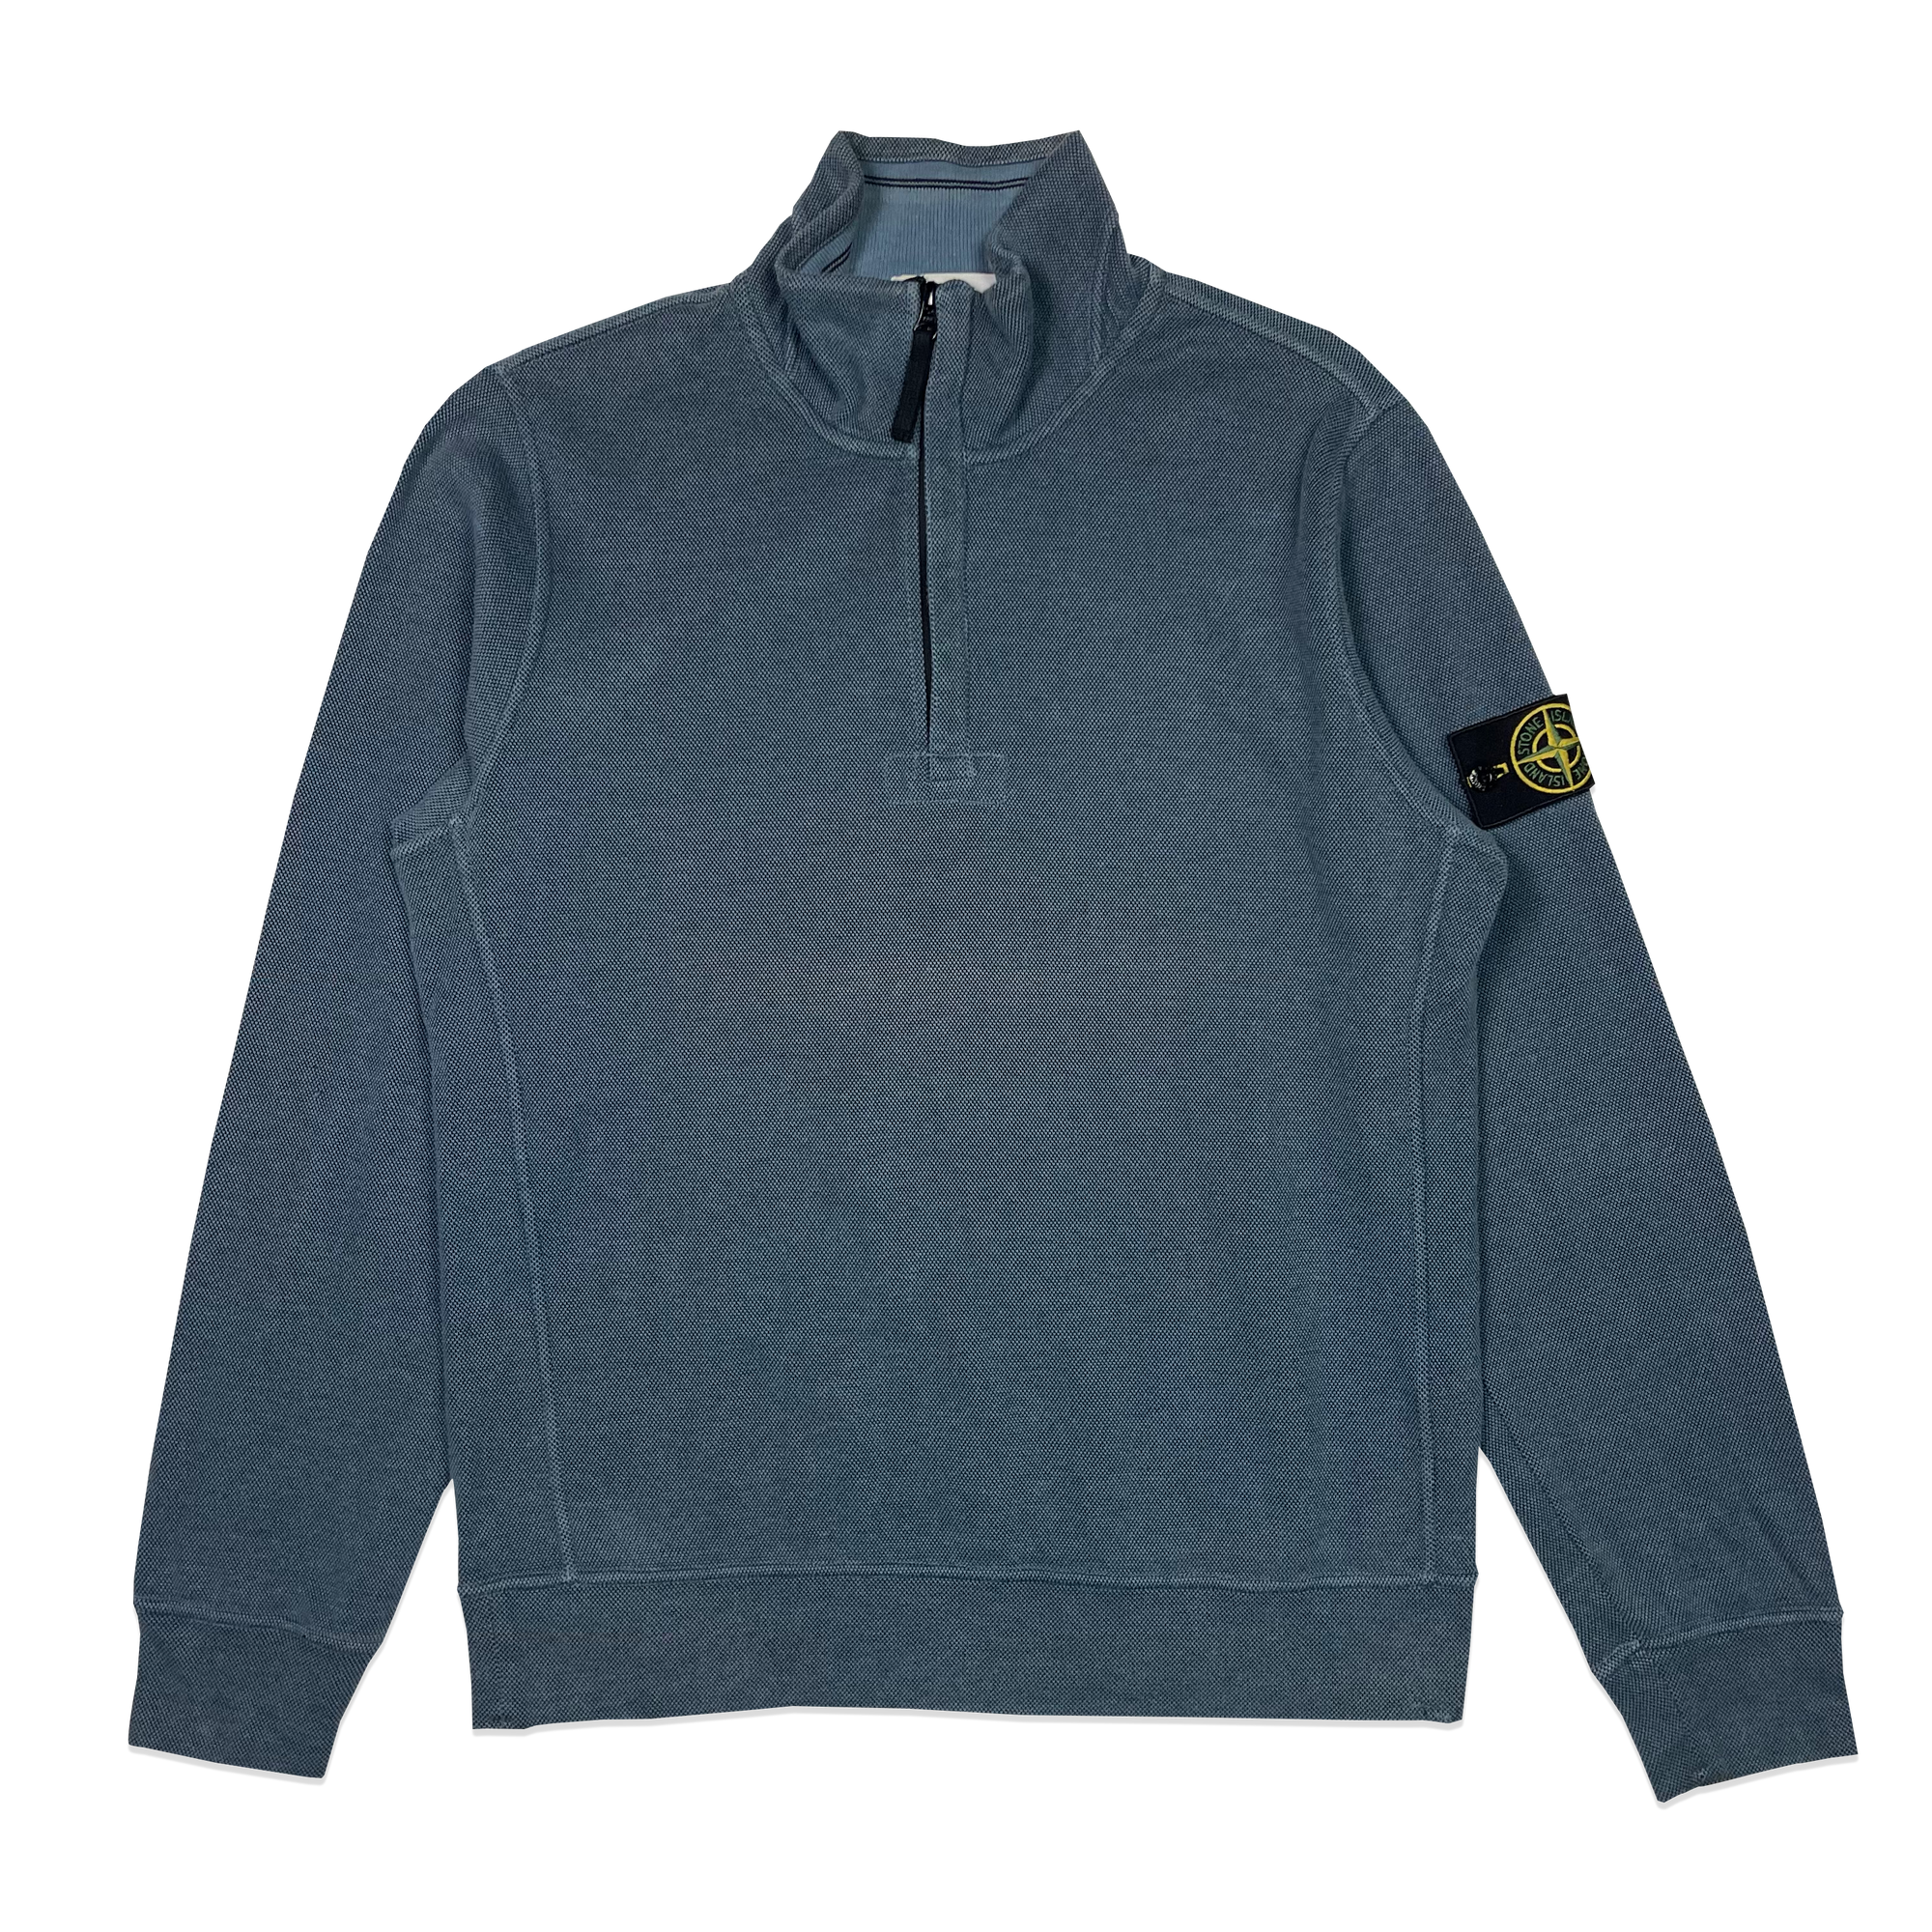 Sweatshirt Half-Zip 2018 - Stone Island - Bleu